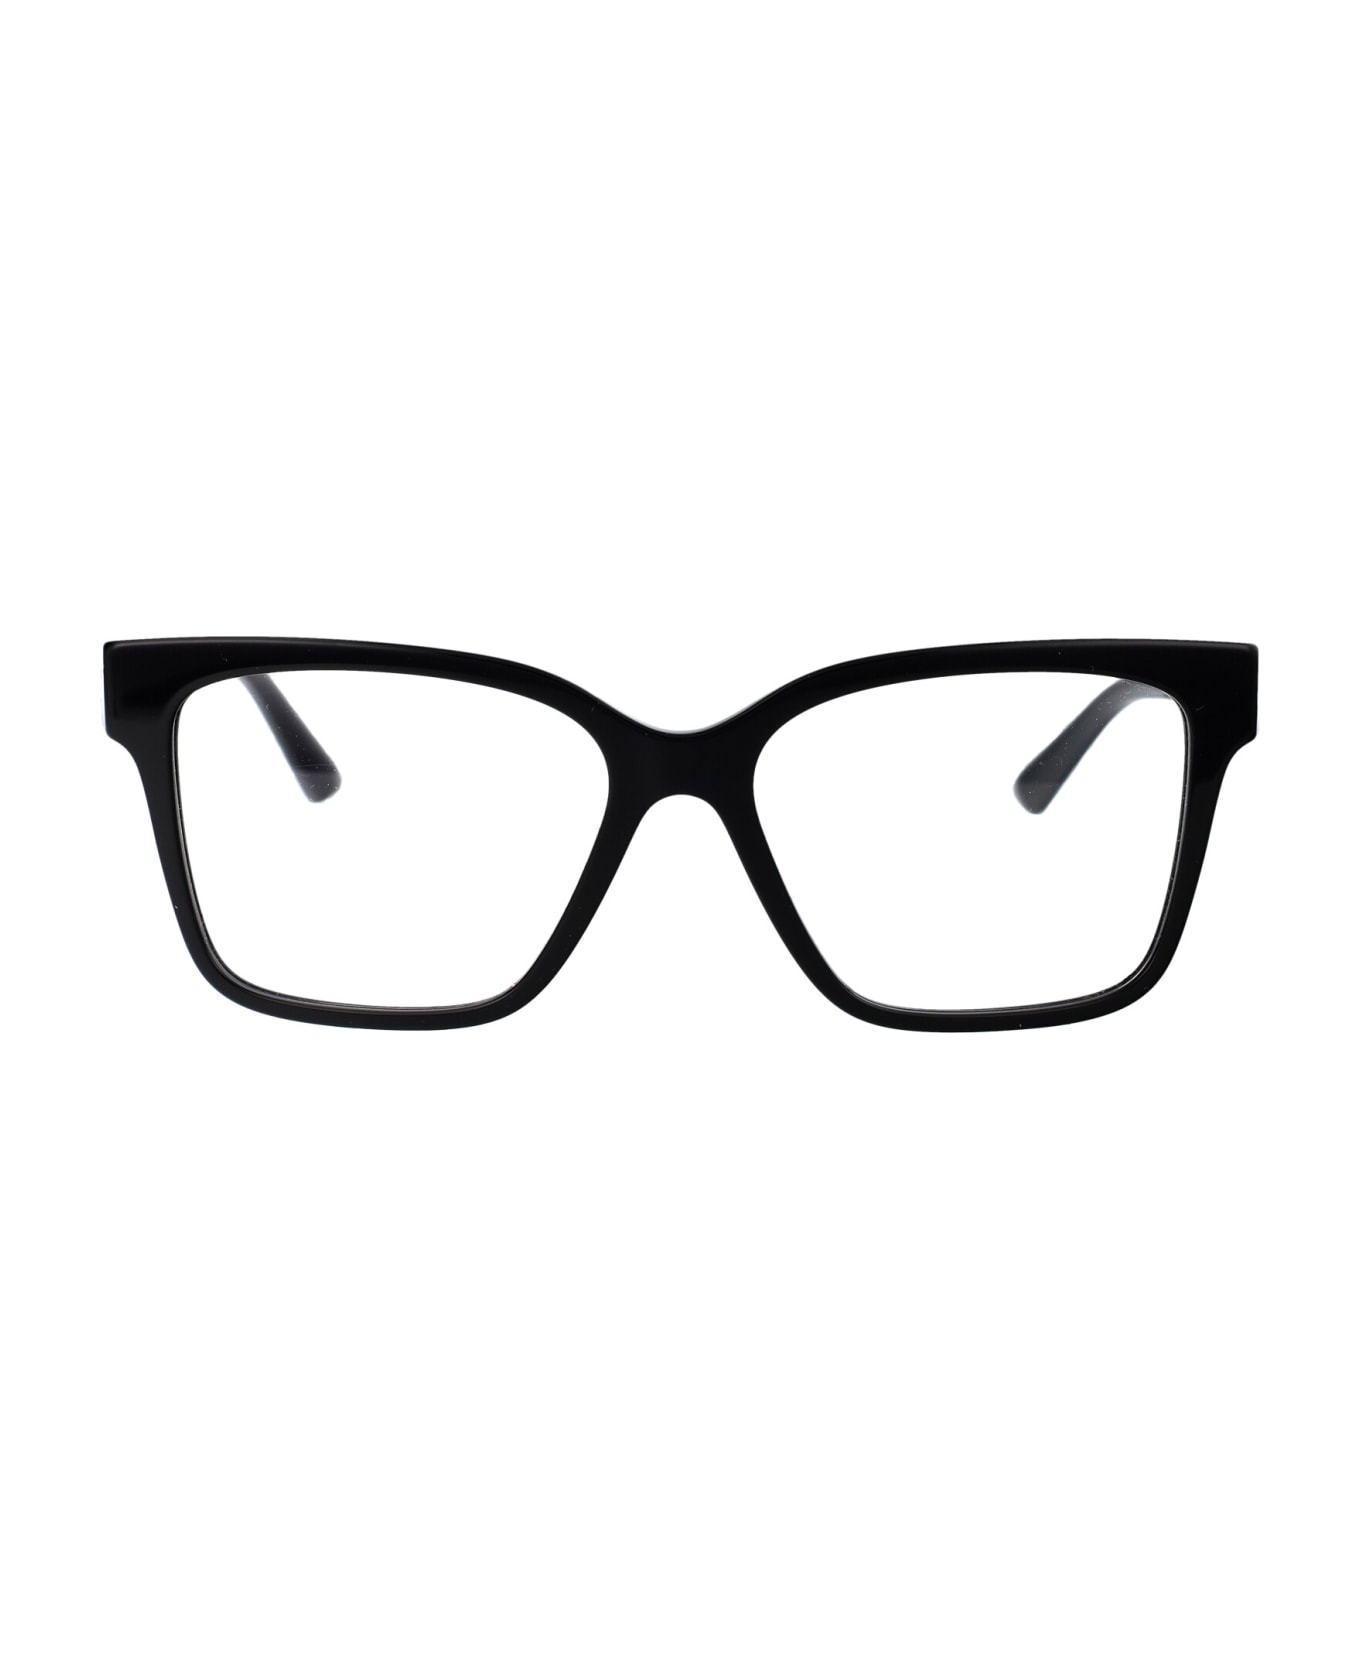 Jimmy Choo Eyewear 0jc3006u Glasses - 5000 Black